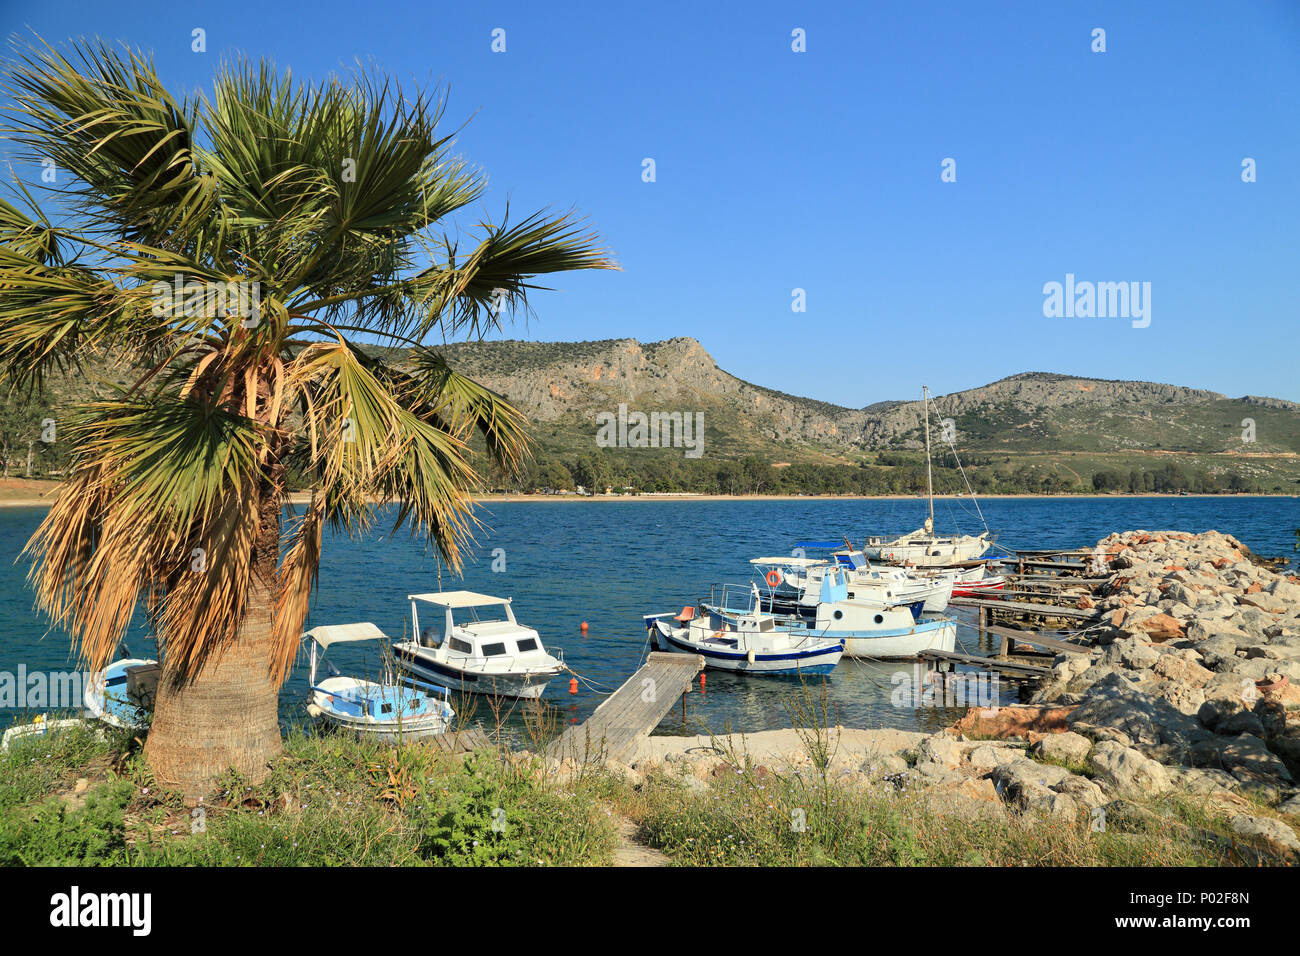 Fishermen boats at Karathona beach, Nafplio, Greece Stock Photo